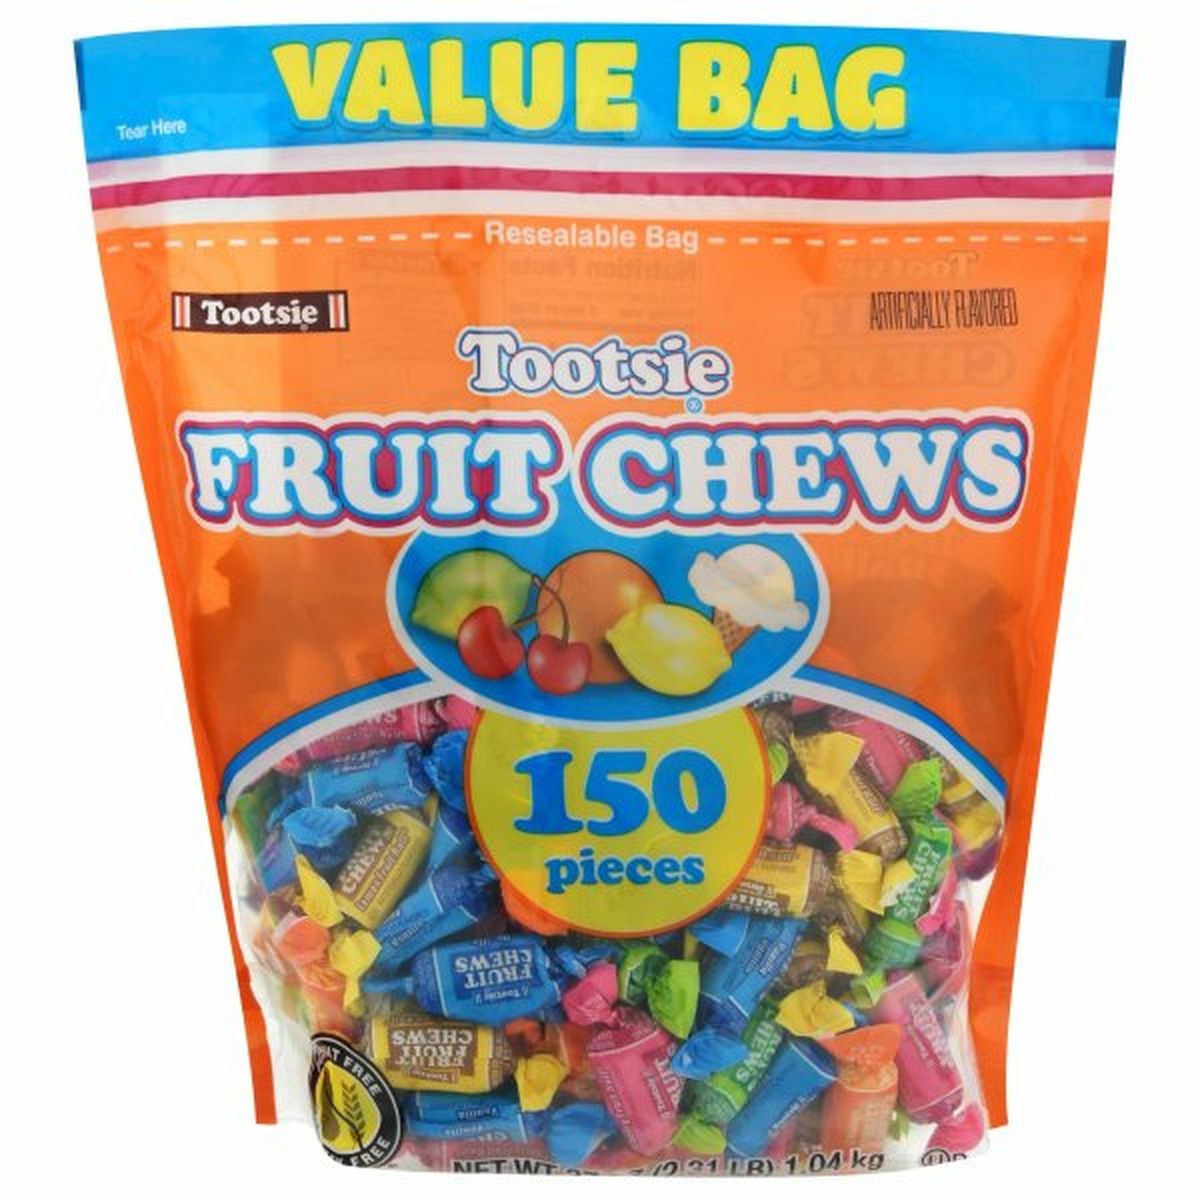 Calories in Tootsie Fruit Chews, Value Bag